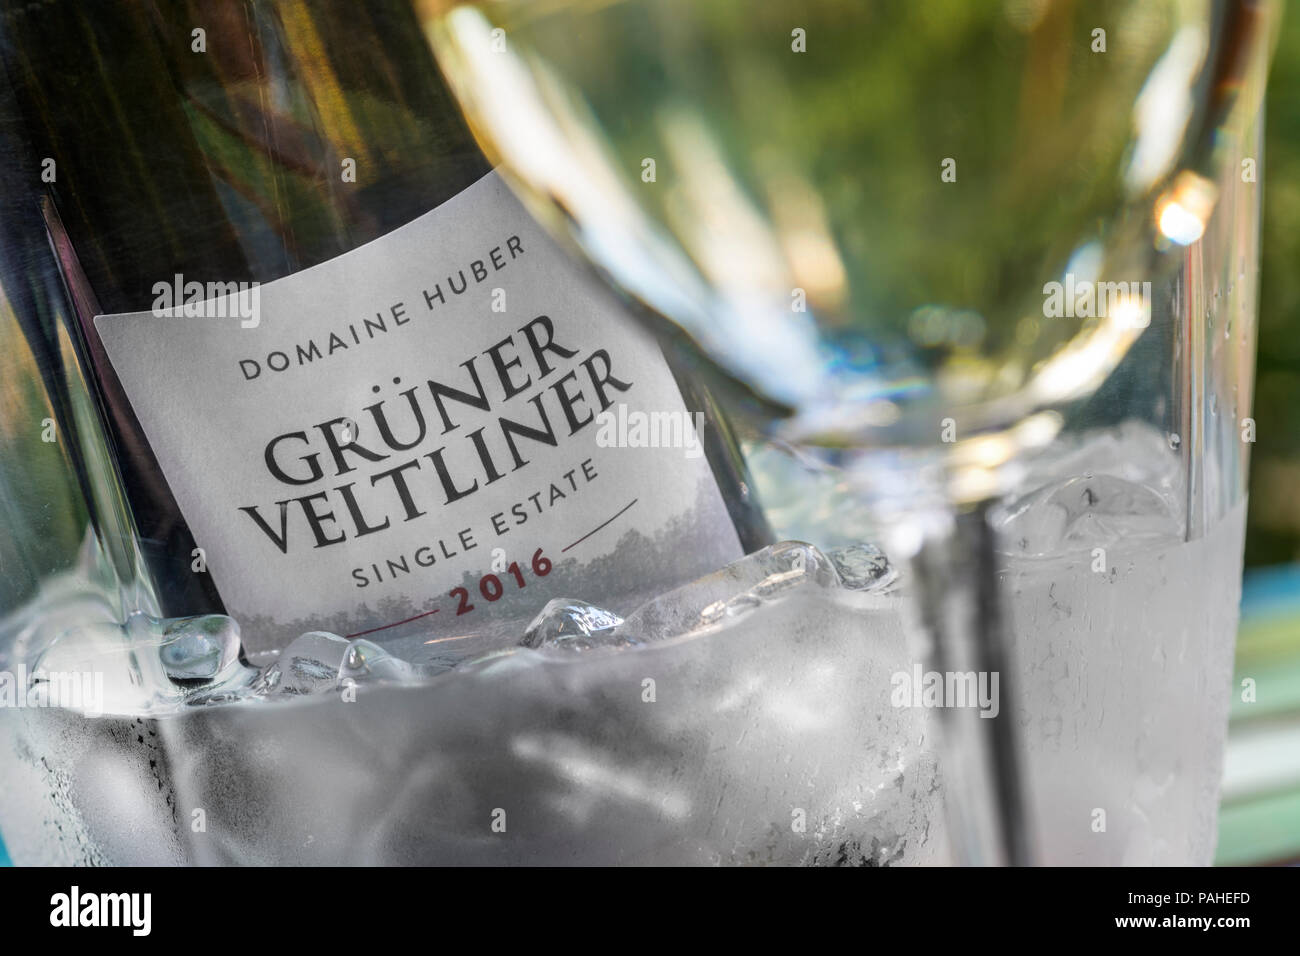 Grüner Veltliner Domaine Huber 'single estate' 2016 vino austriaco in alfresco wine cooler con vetro di Grüner Veltliner vino in primo piano Foto Stock